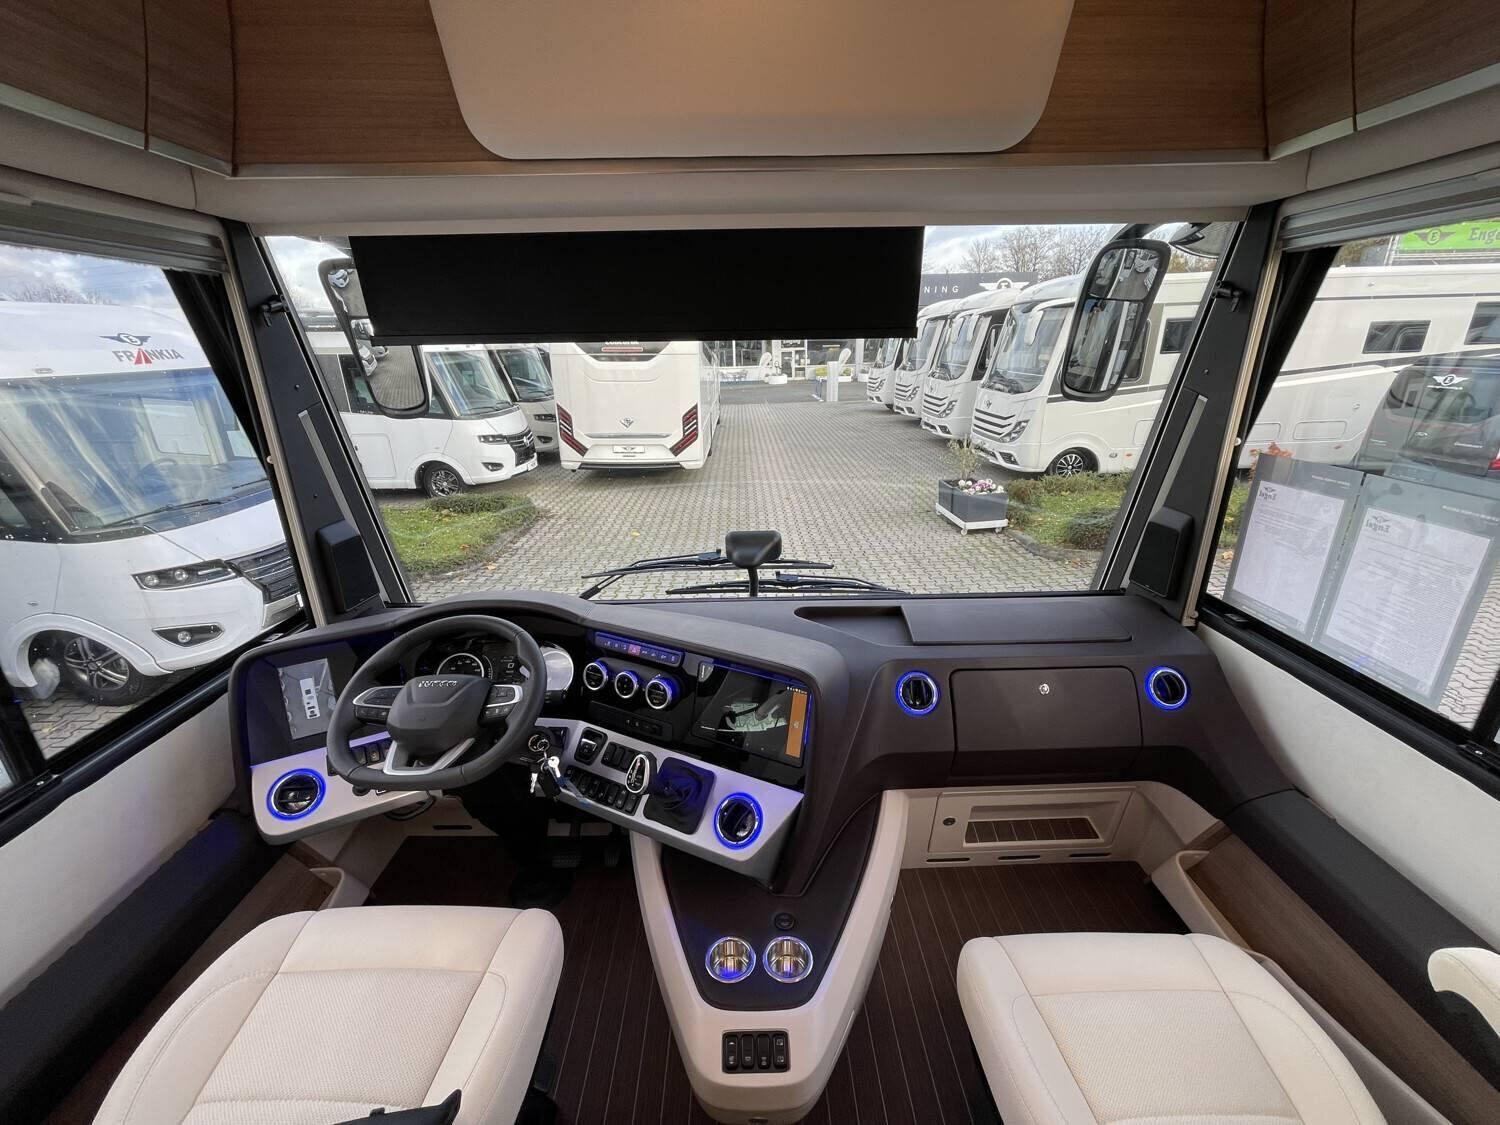 Wohnmobil 🚐 Concorde Charisma 860 LI kaufen